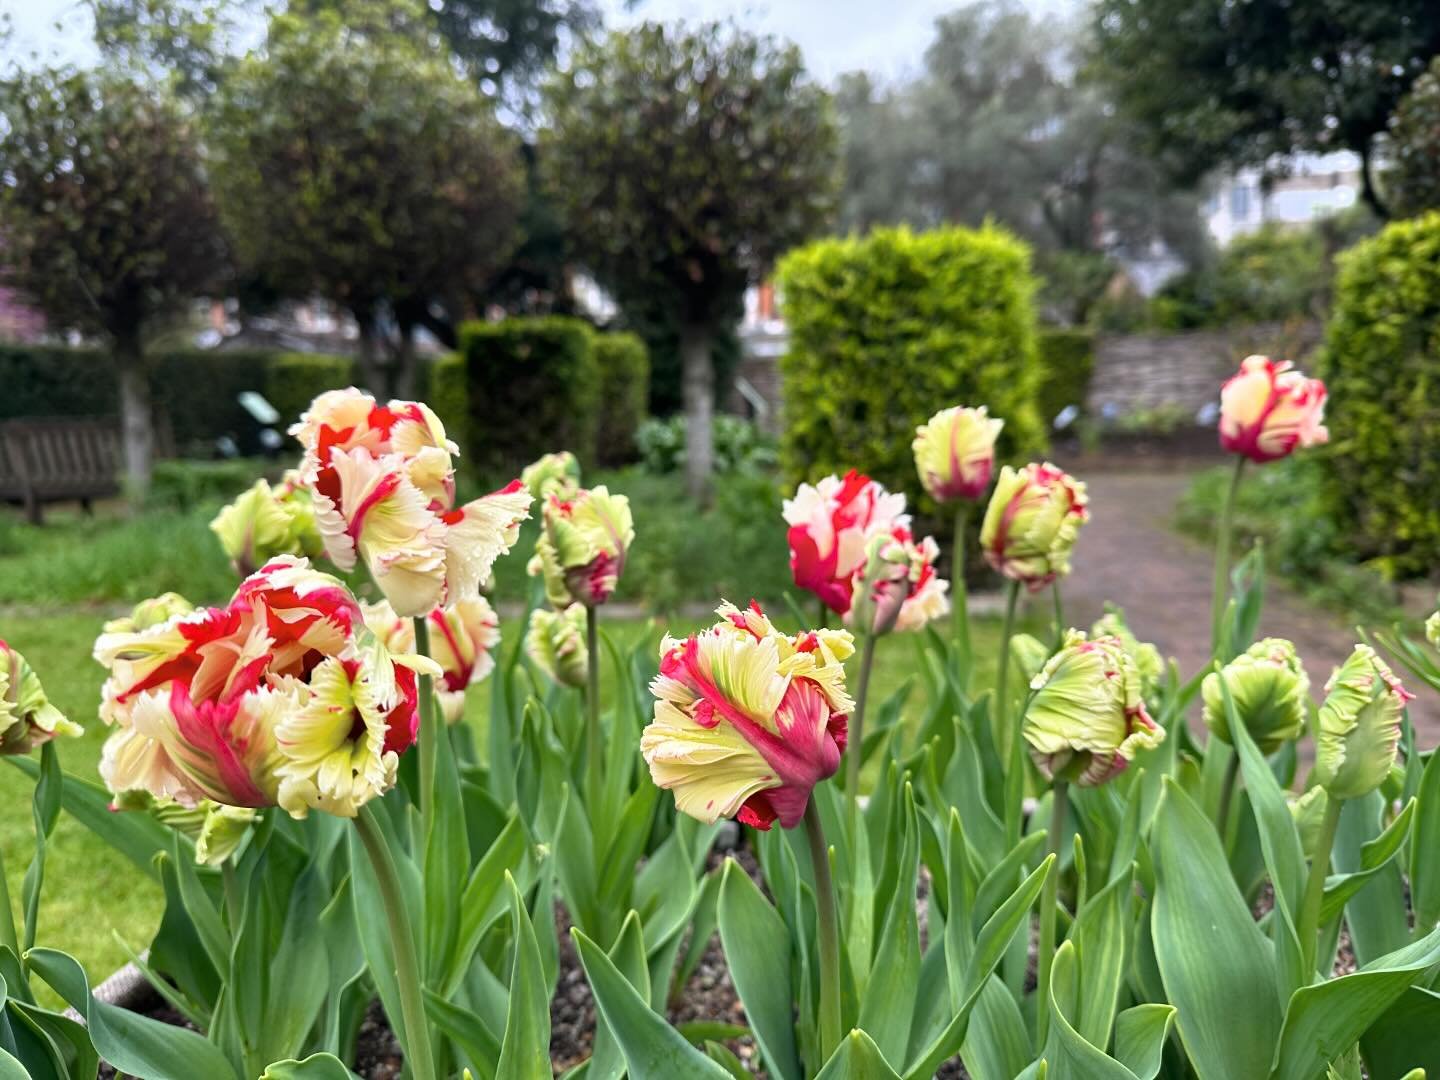 Tulip Estella Rynveld, planted in pots on her own to appreciate how she unfurls&hellip;
.
.
.
#tulipseason 
#tuliptime
#parrottulips🌷 
#estellarijnveld 
#makingastatement 
#plantingplans 
#cleverplanting 
#plantingforimpact 
#landscapedesigner 
#gar